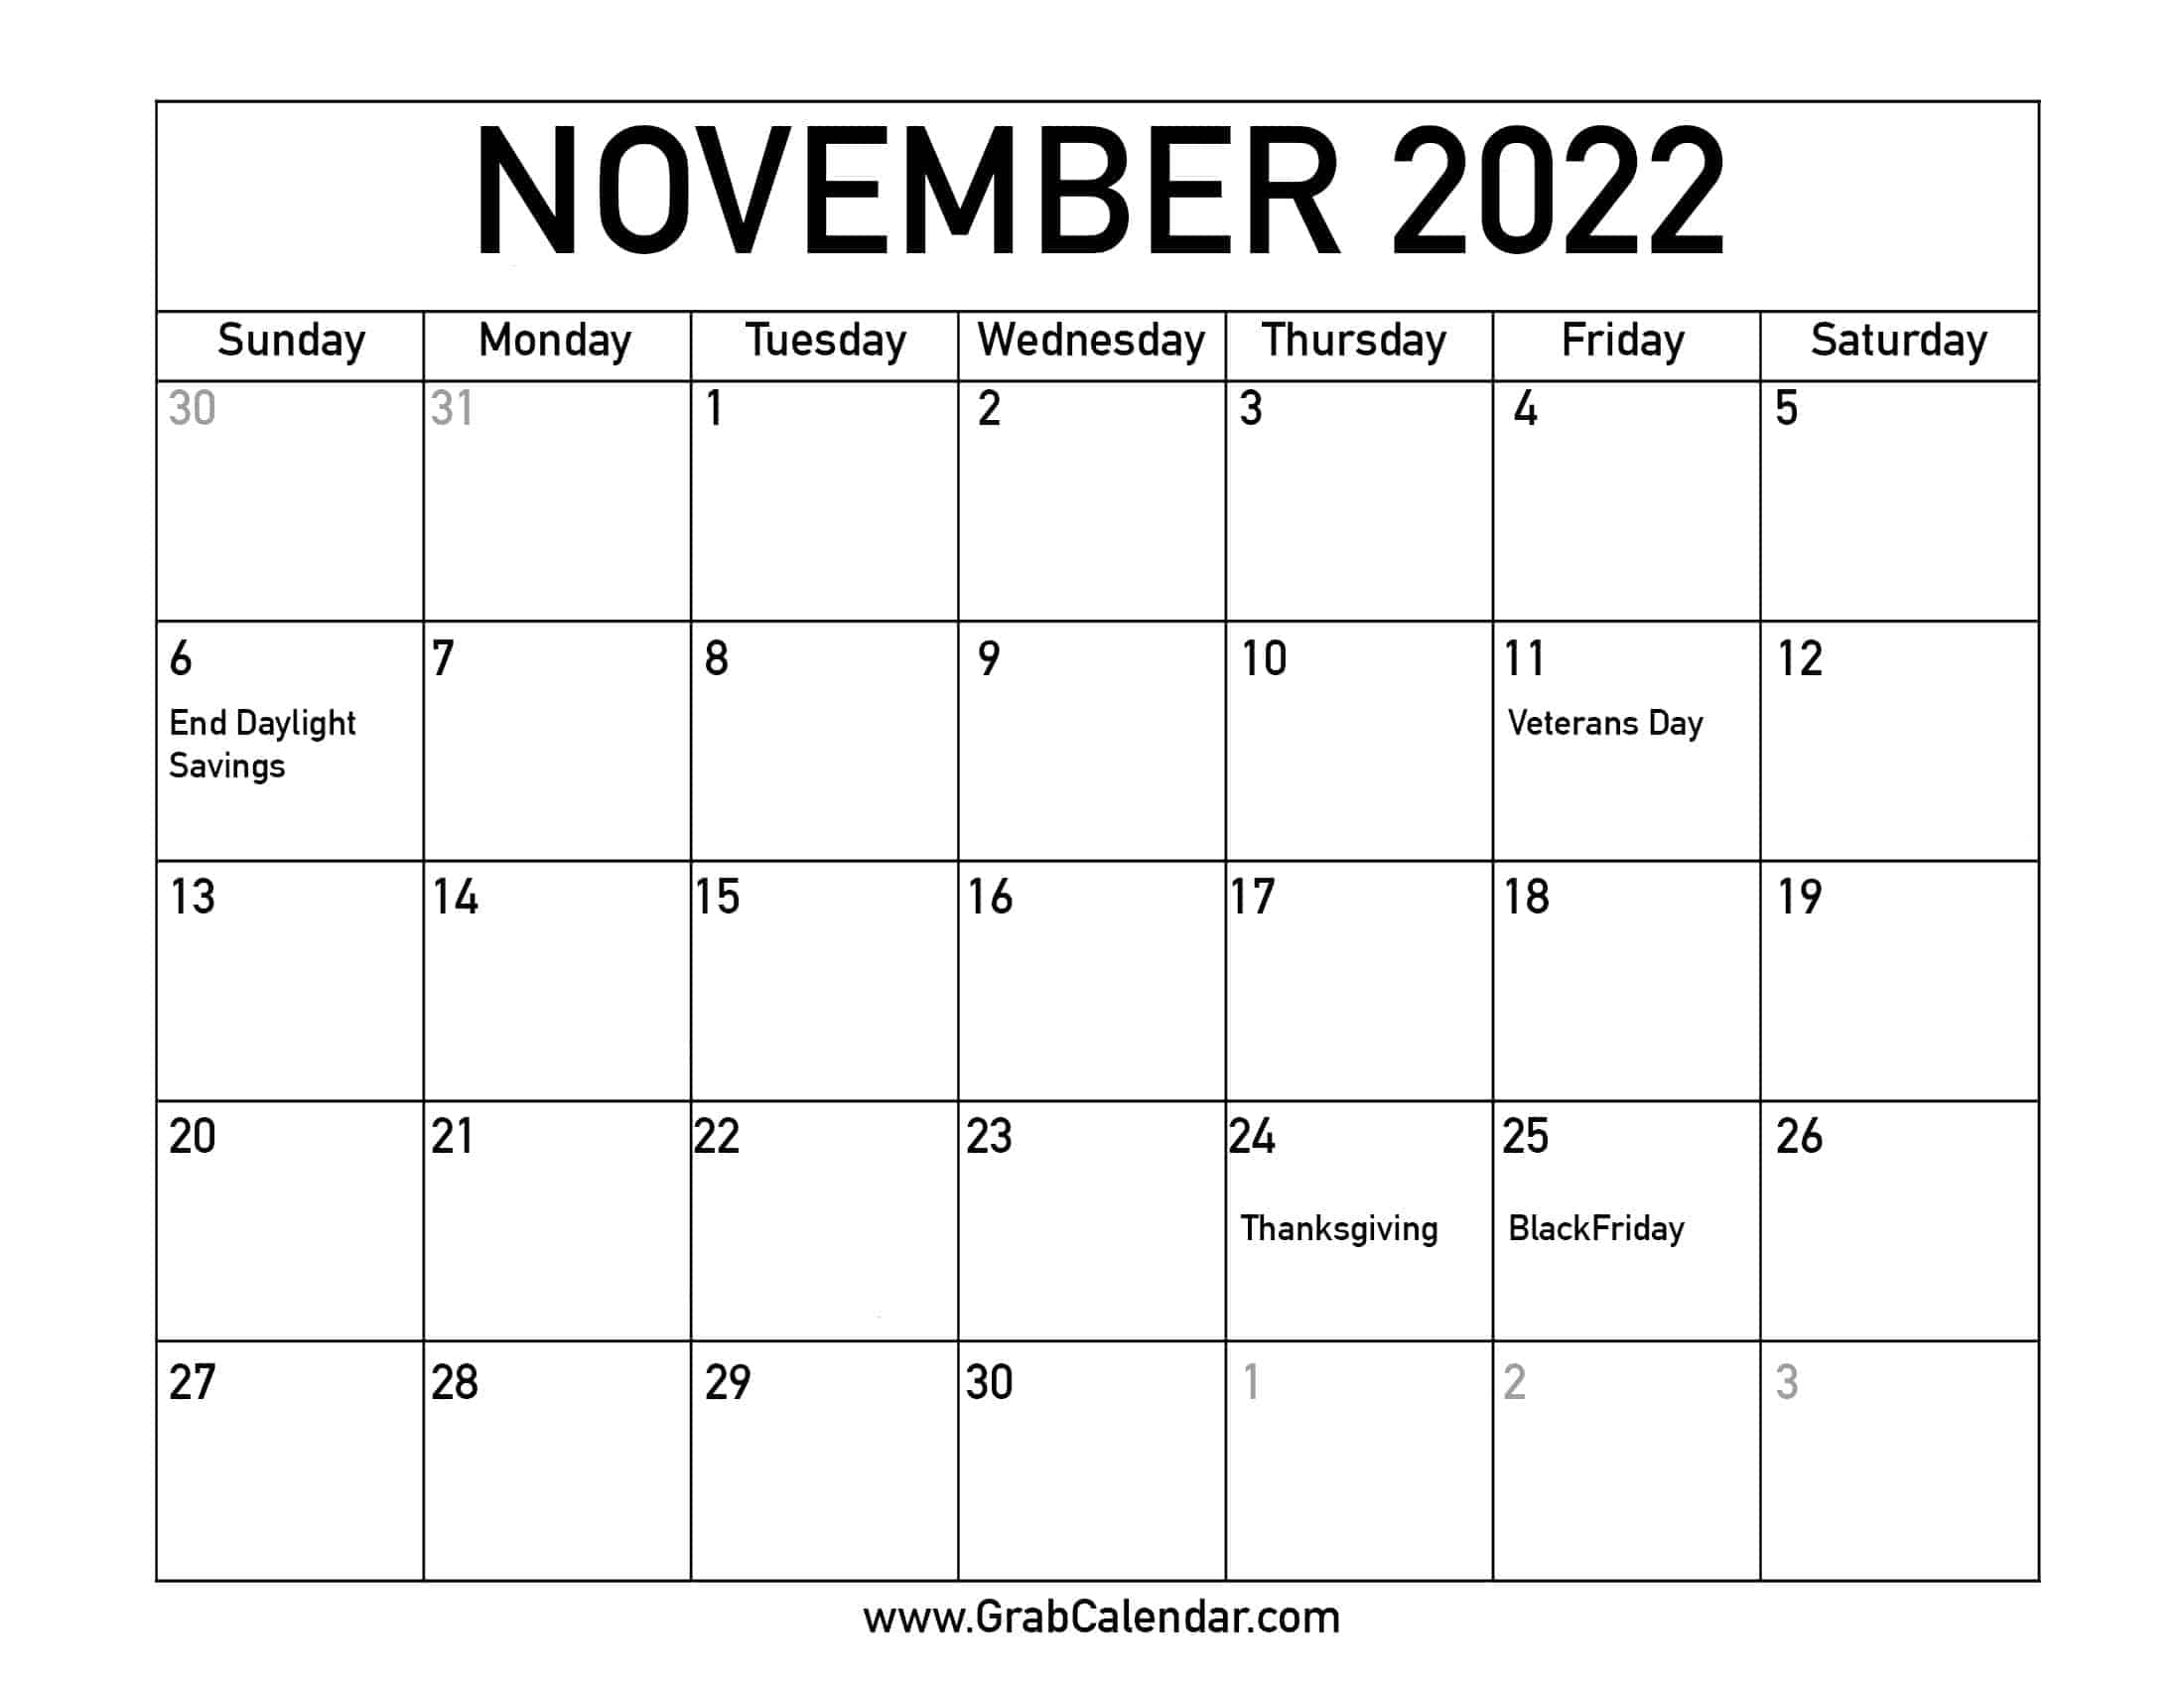 Nov 2022 Calendar With Holidays Printable November 2022 Calendar